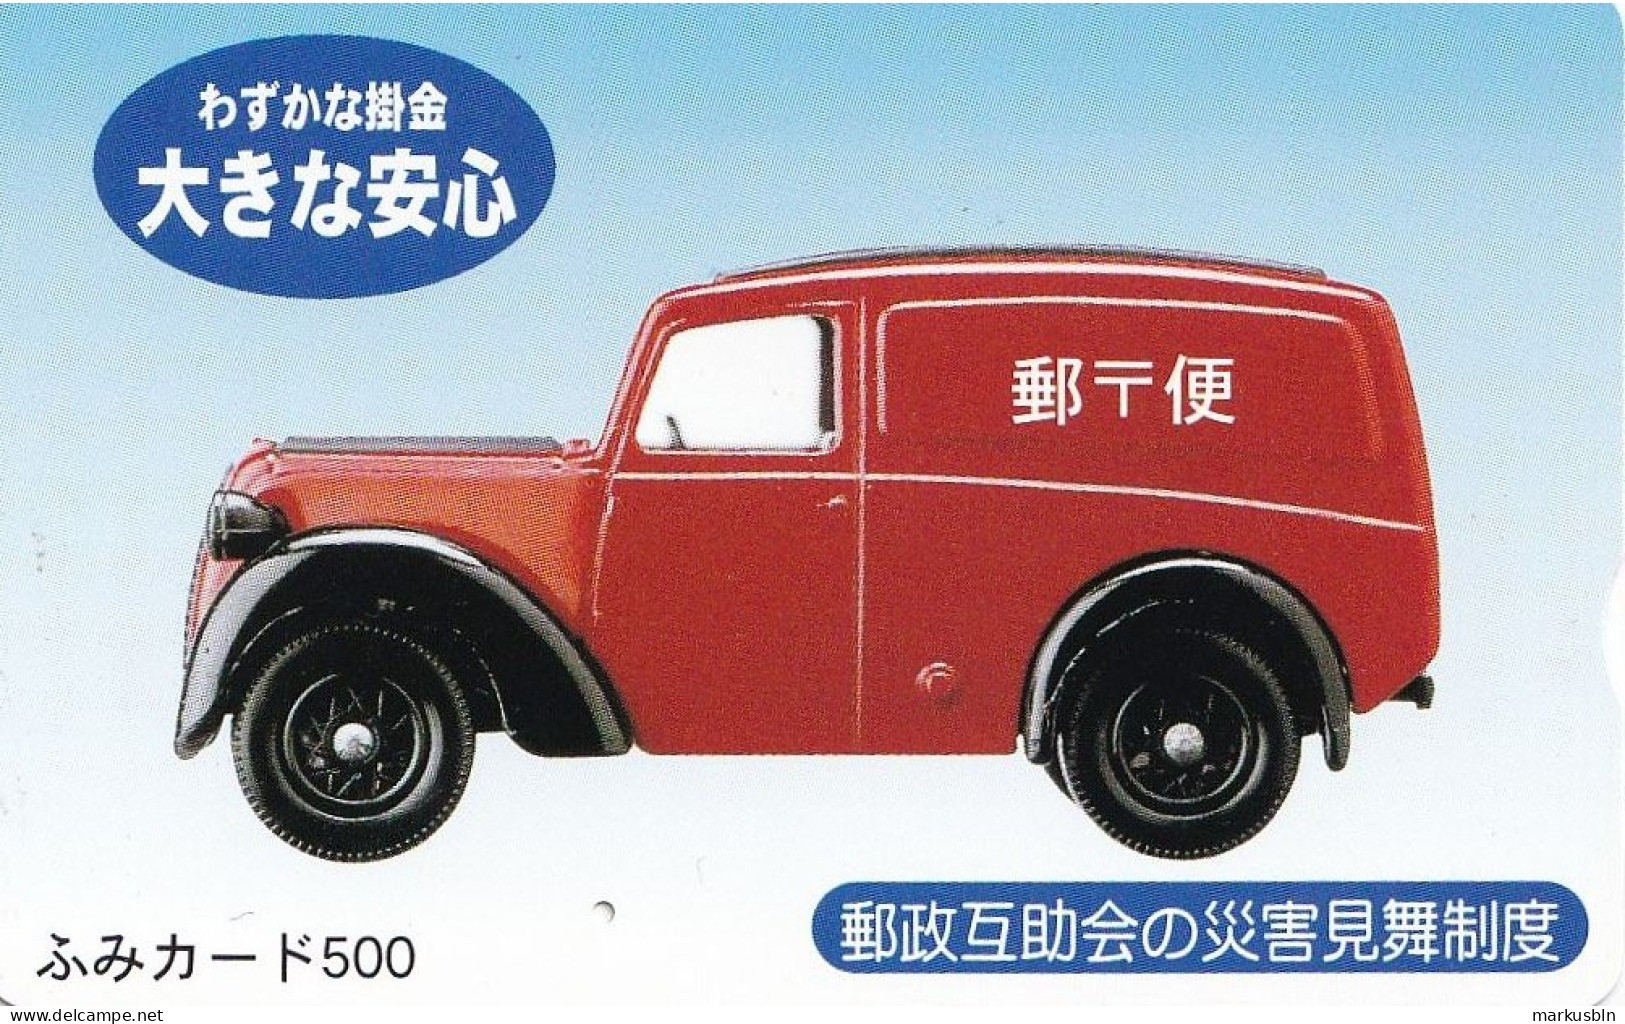 Japan Prepaid T Card 500 - Oldtimer Red Car - Japan